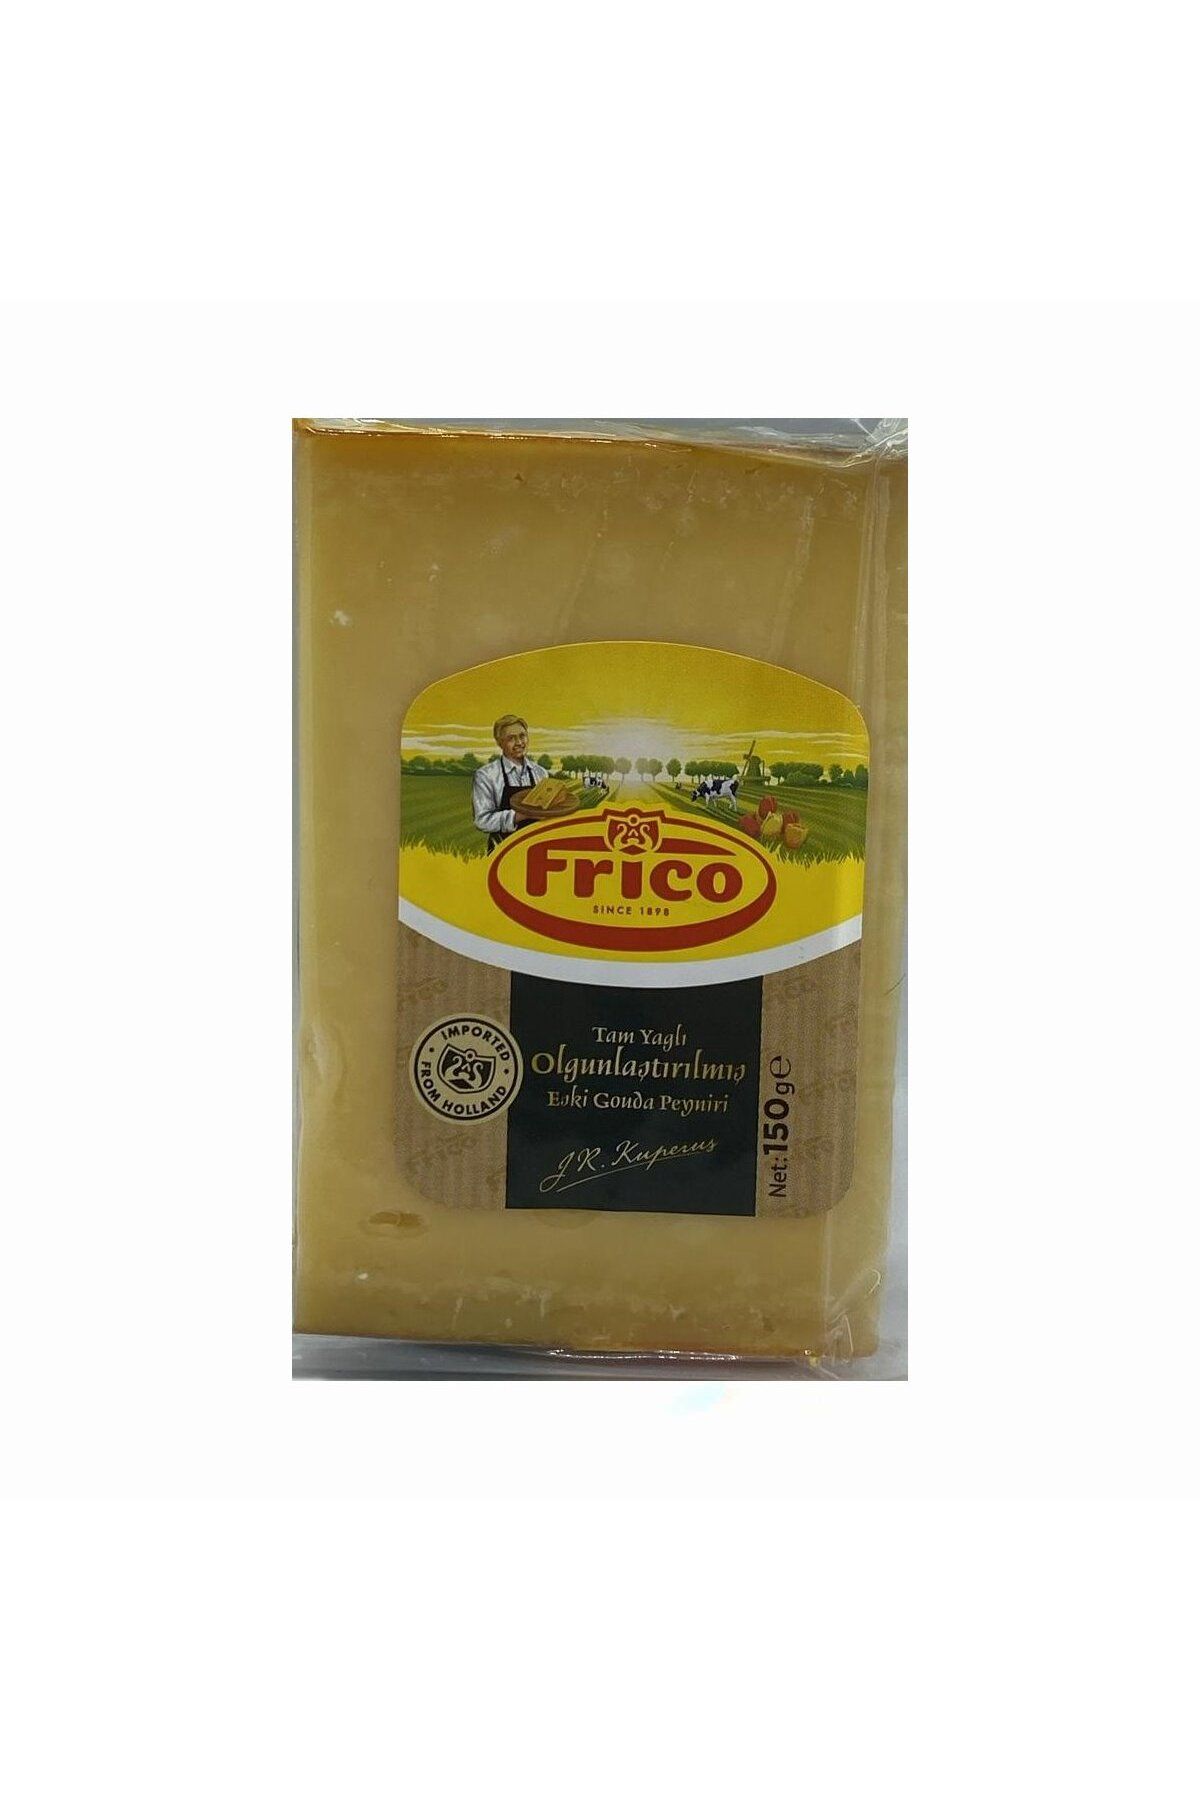 Frico Old Dutch Olgunlaştırılmış Gouda Peyniri Ortalama 150 Gr.